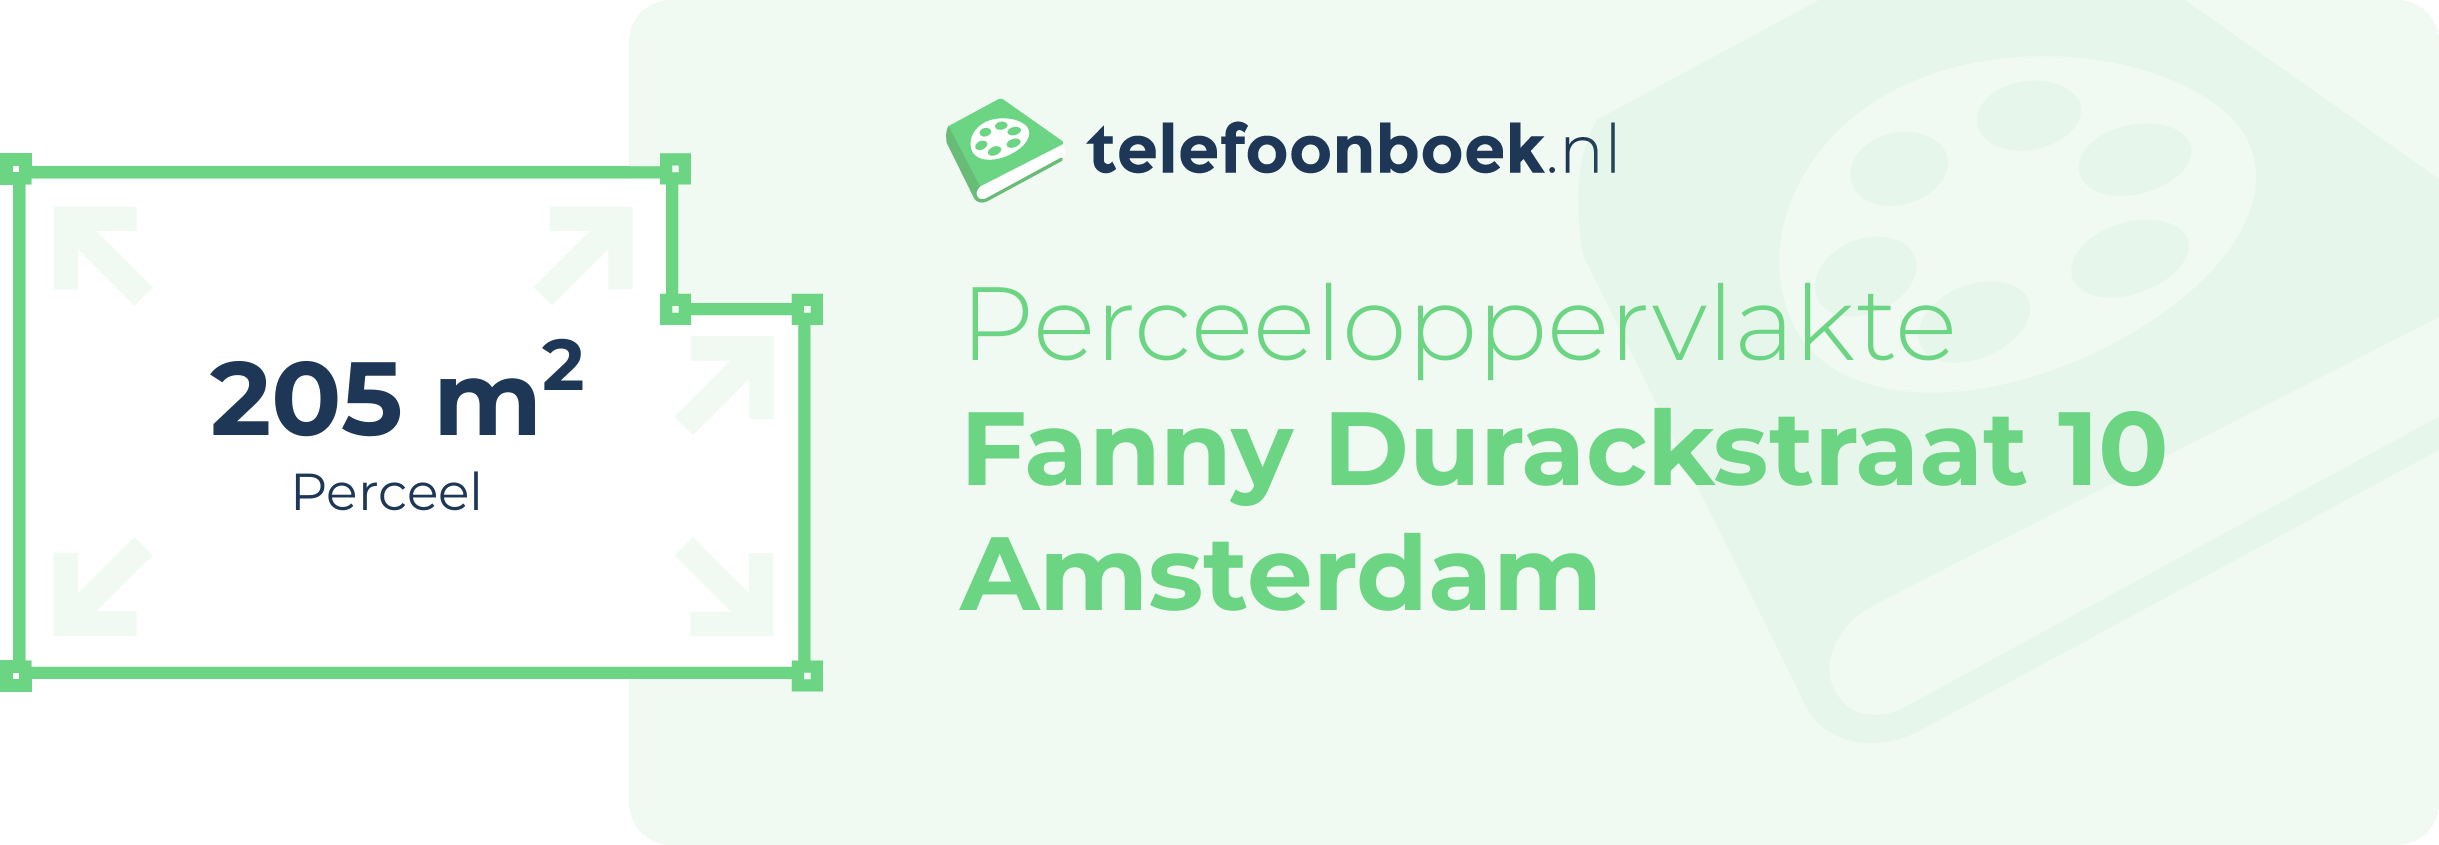 Perceeloppervlakte Fanny Durackstraat 10 Amsterdam